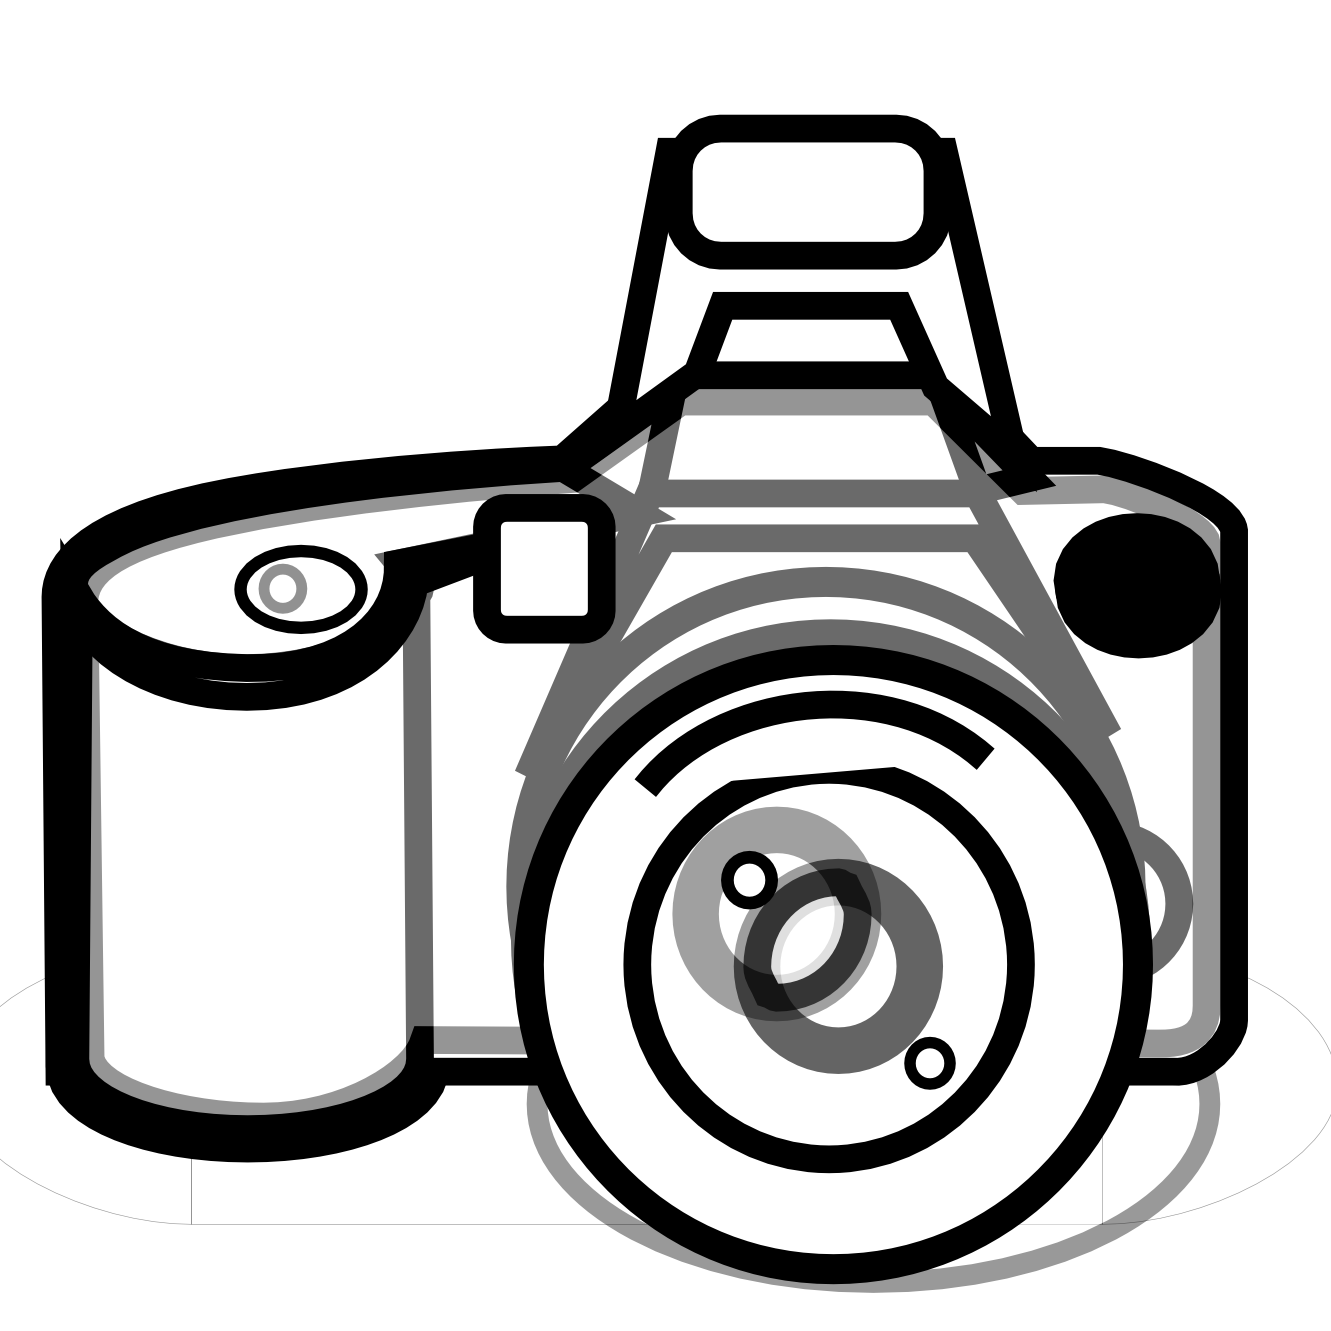 Digital Camera Clipart Black And White | Clipart Panda - Free ...